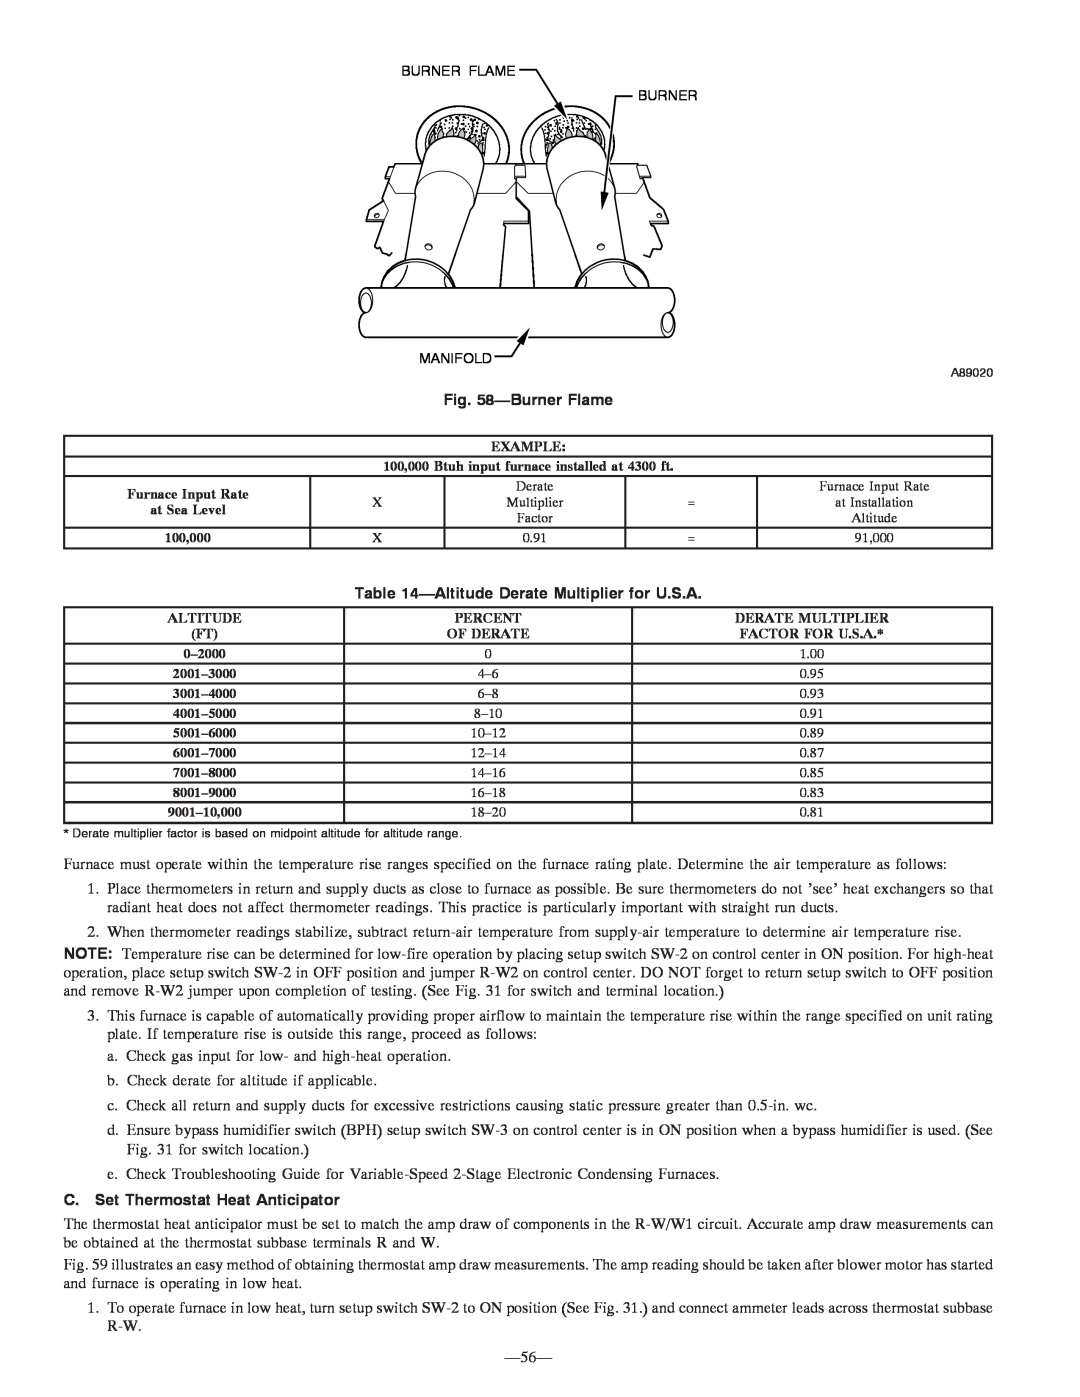 Bryant 355MAV instruction manual BurnerFlame, AltitudeDerate Multiplier for U.S.A, C. Set Thermostat Heat Anticipator 